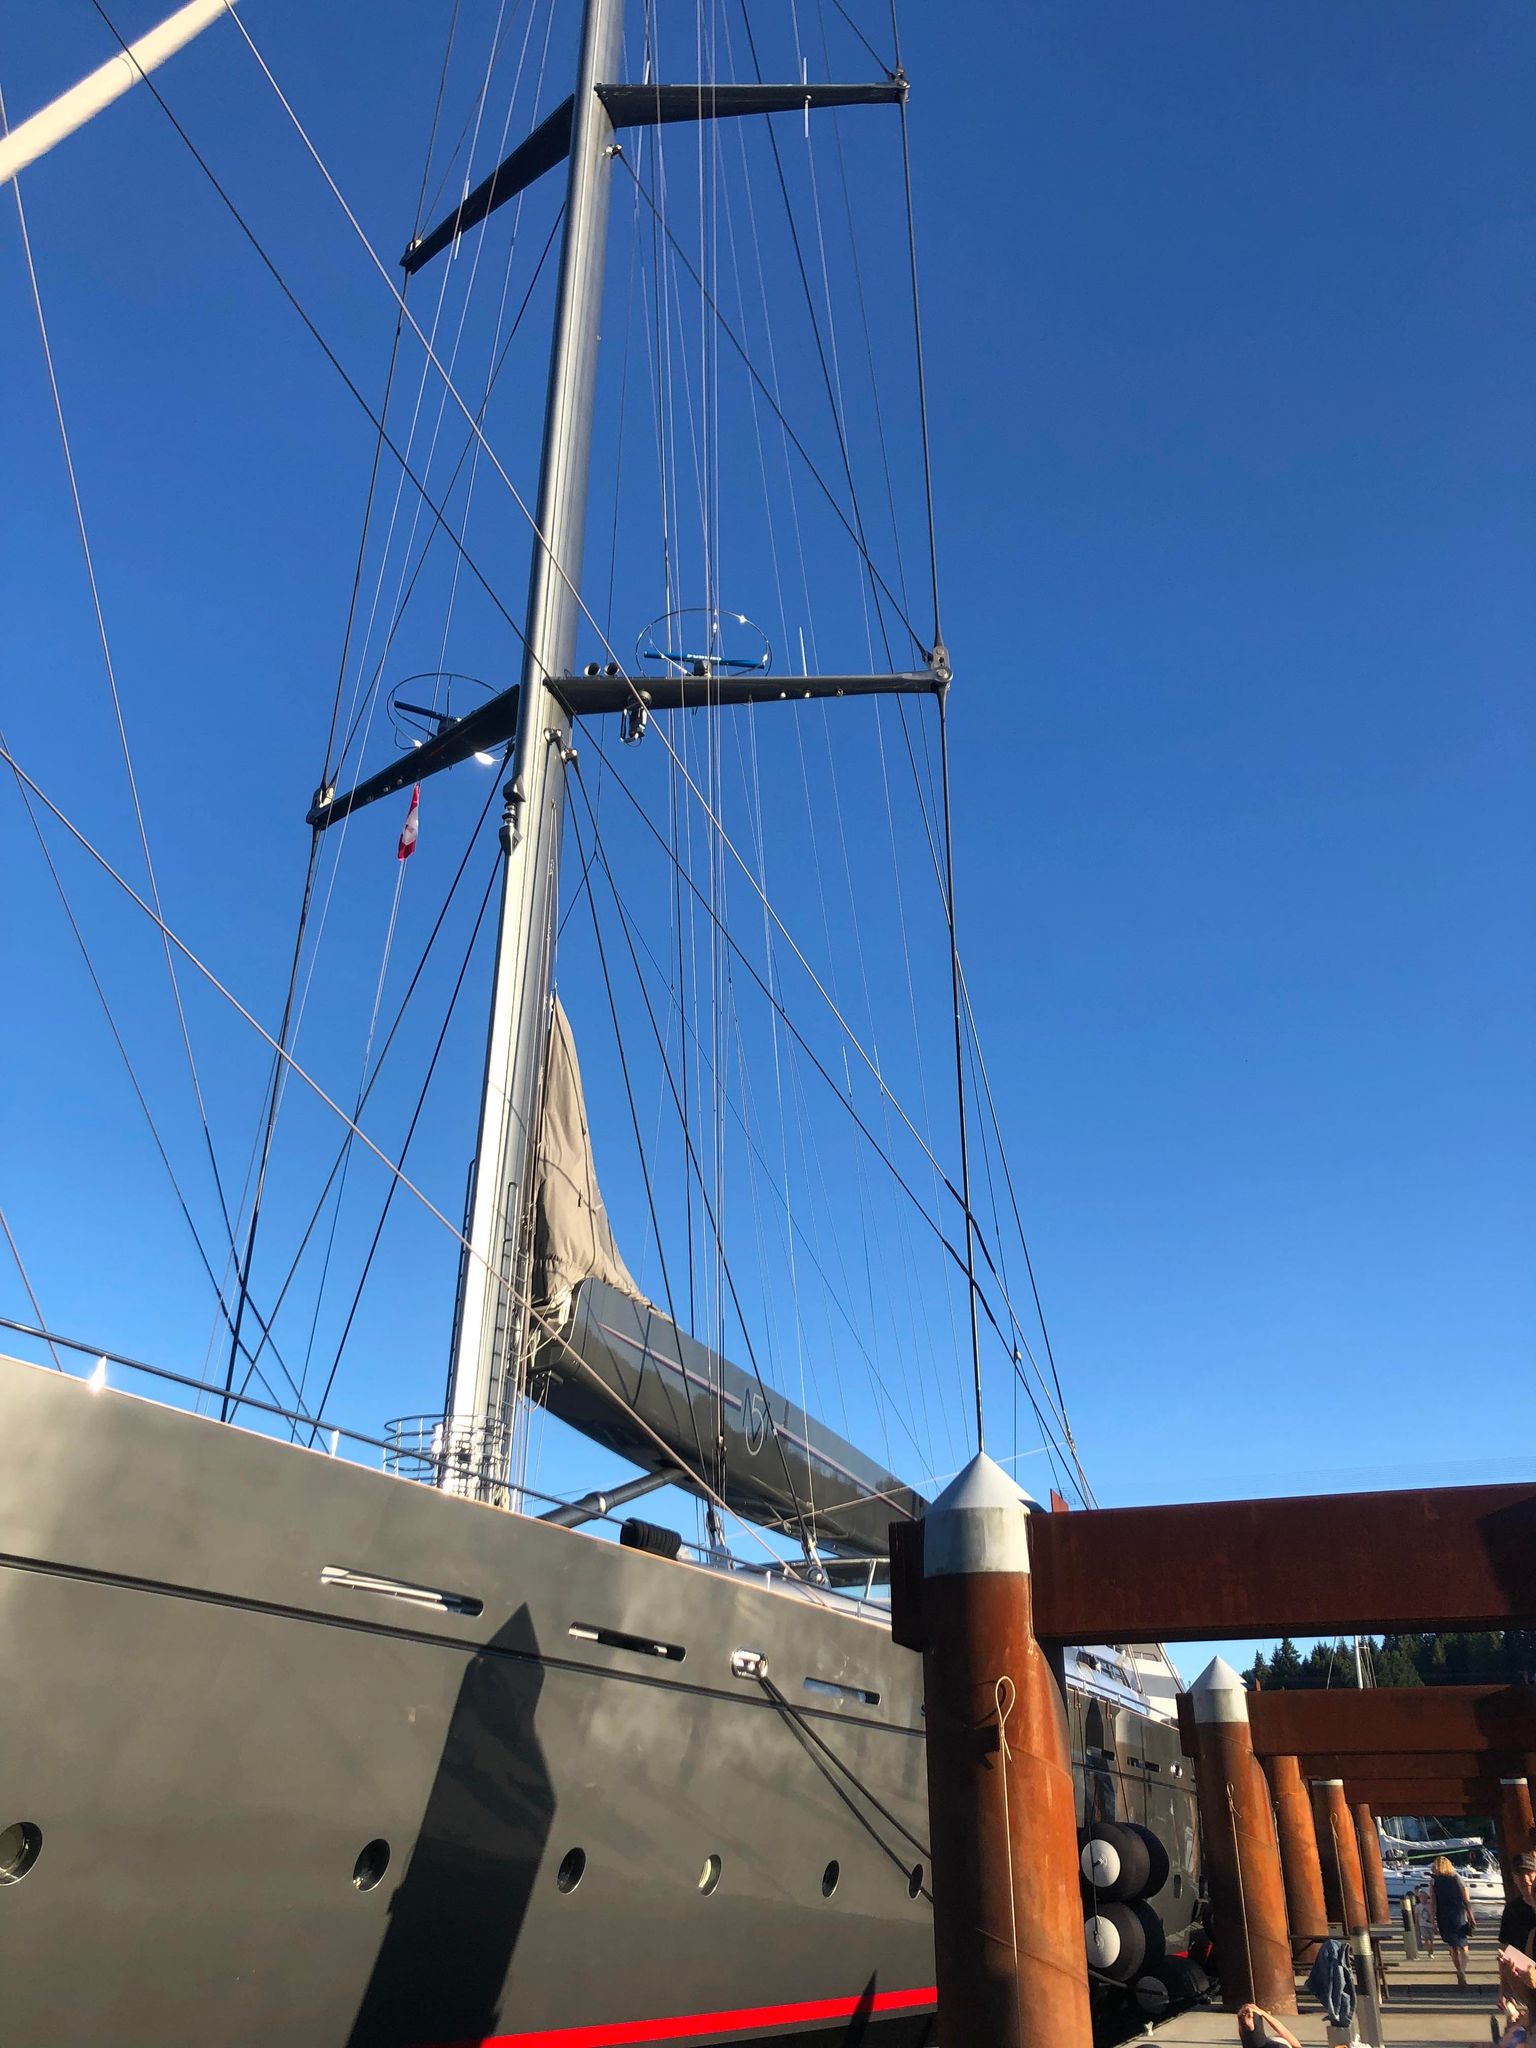 Worlds largest single-masted sailing yacht docked at Mill Bay Marina